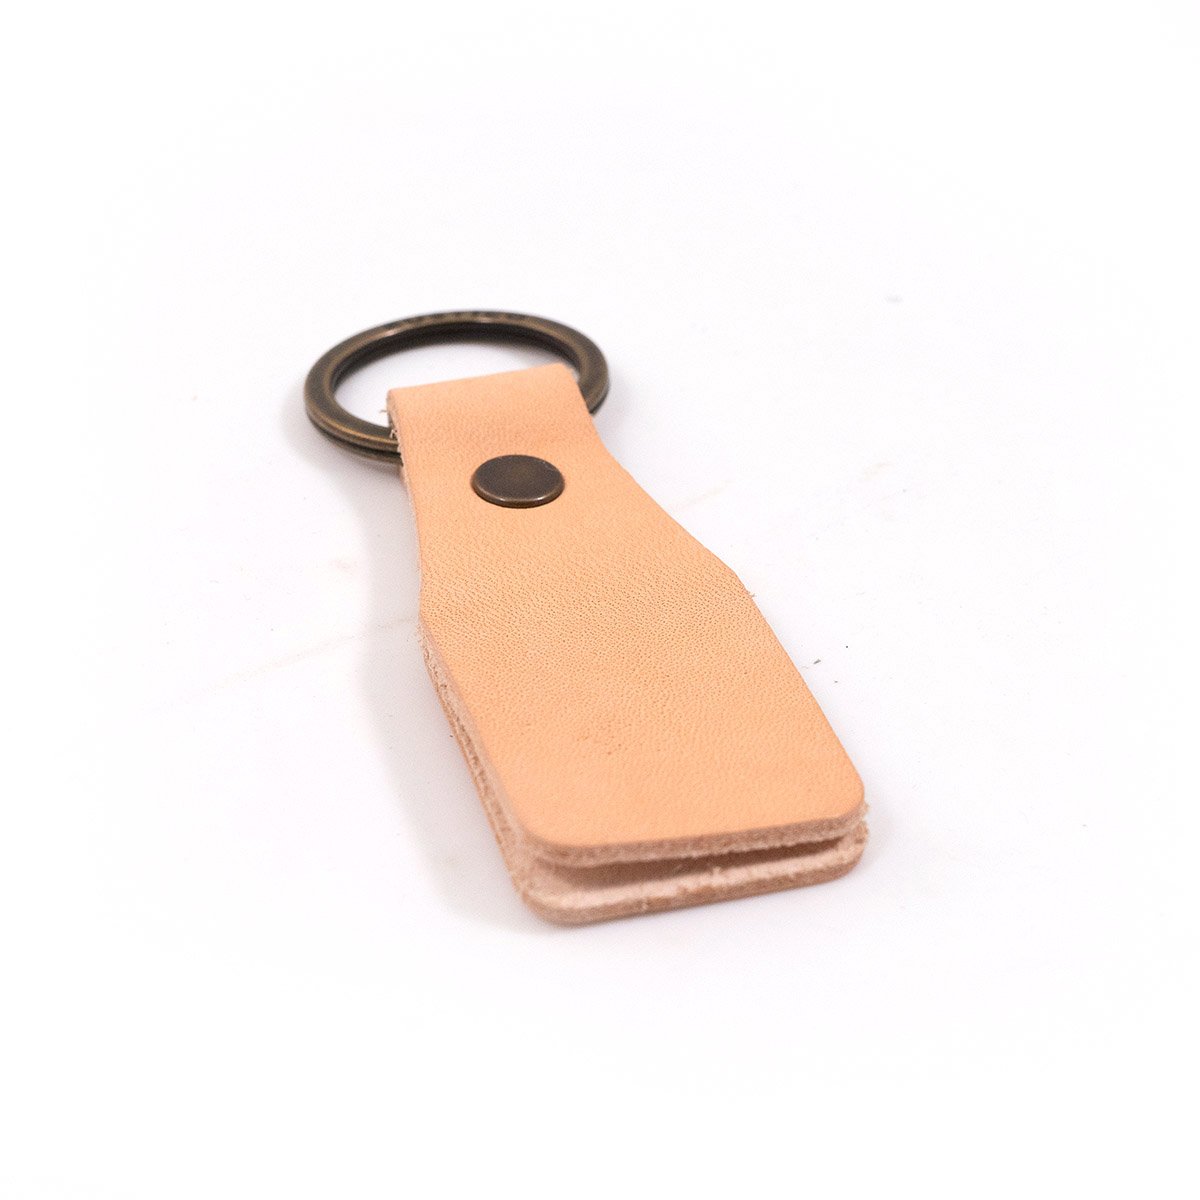 Rustico Loop Leather Keychain in Buckskin AC0131-0005